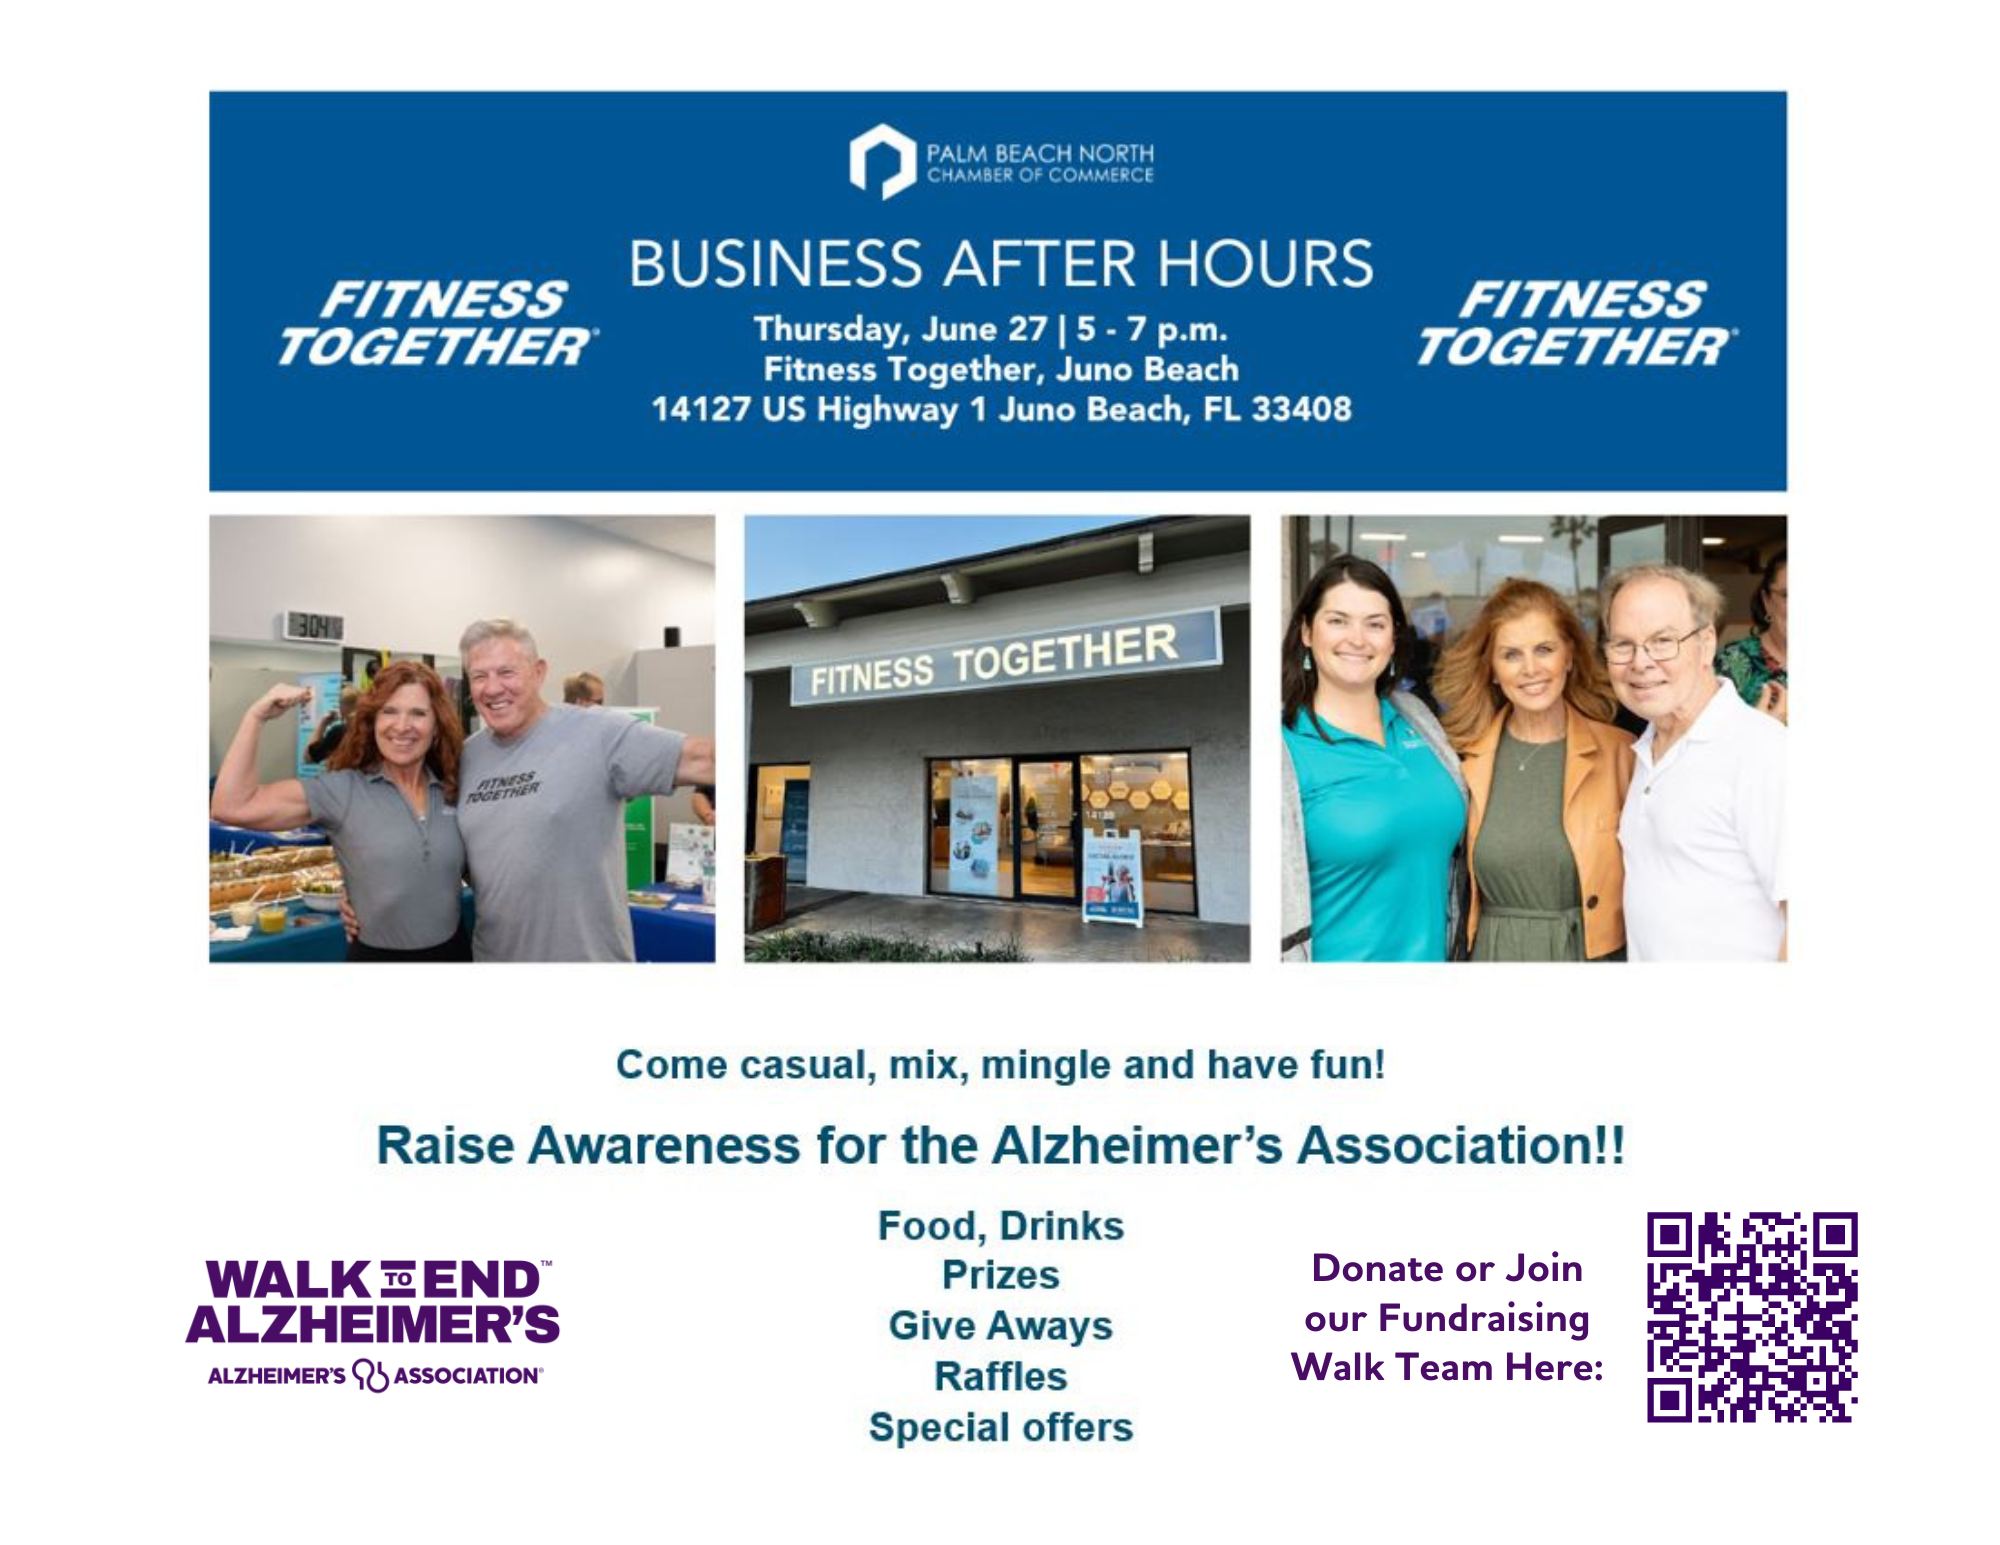 BAH - Fitness Together Flyer with Alzheimer's Association Lo